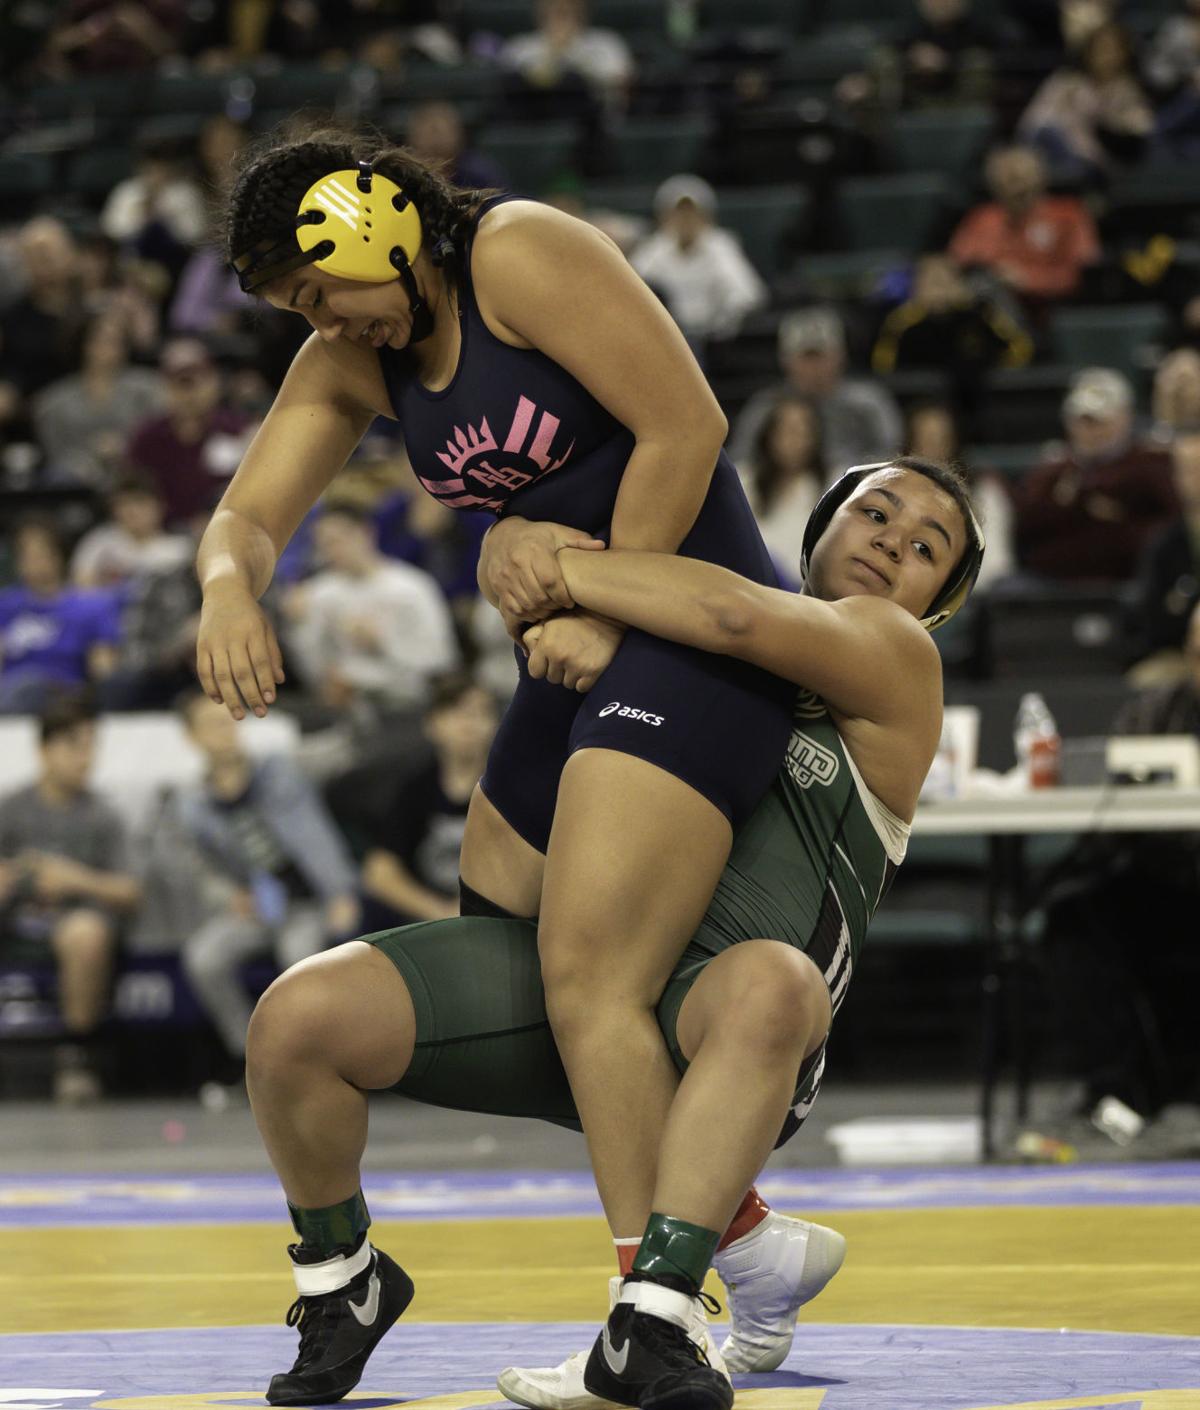 High School Wrestling In New Jersey Adapting To Rising Girls Participation Atlantic City Sports News Pressofatlanticcity Com